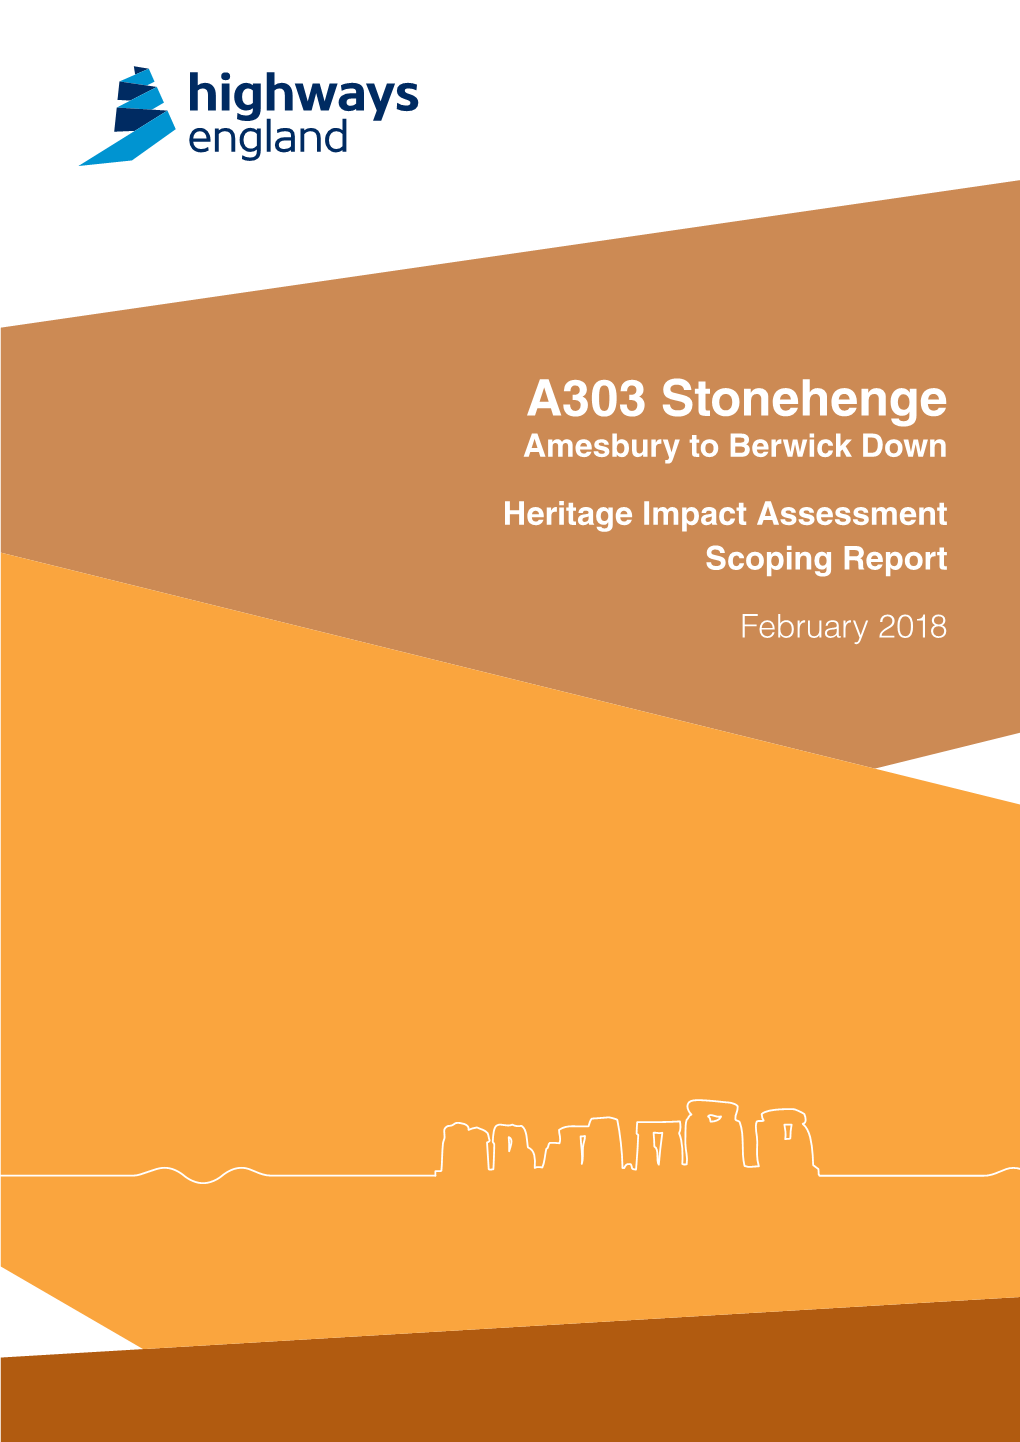 A303 Stonehenge Amesbury to Berwick Down Heritage Impact